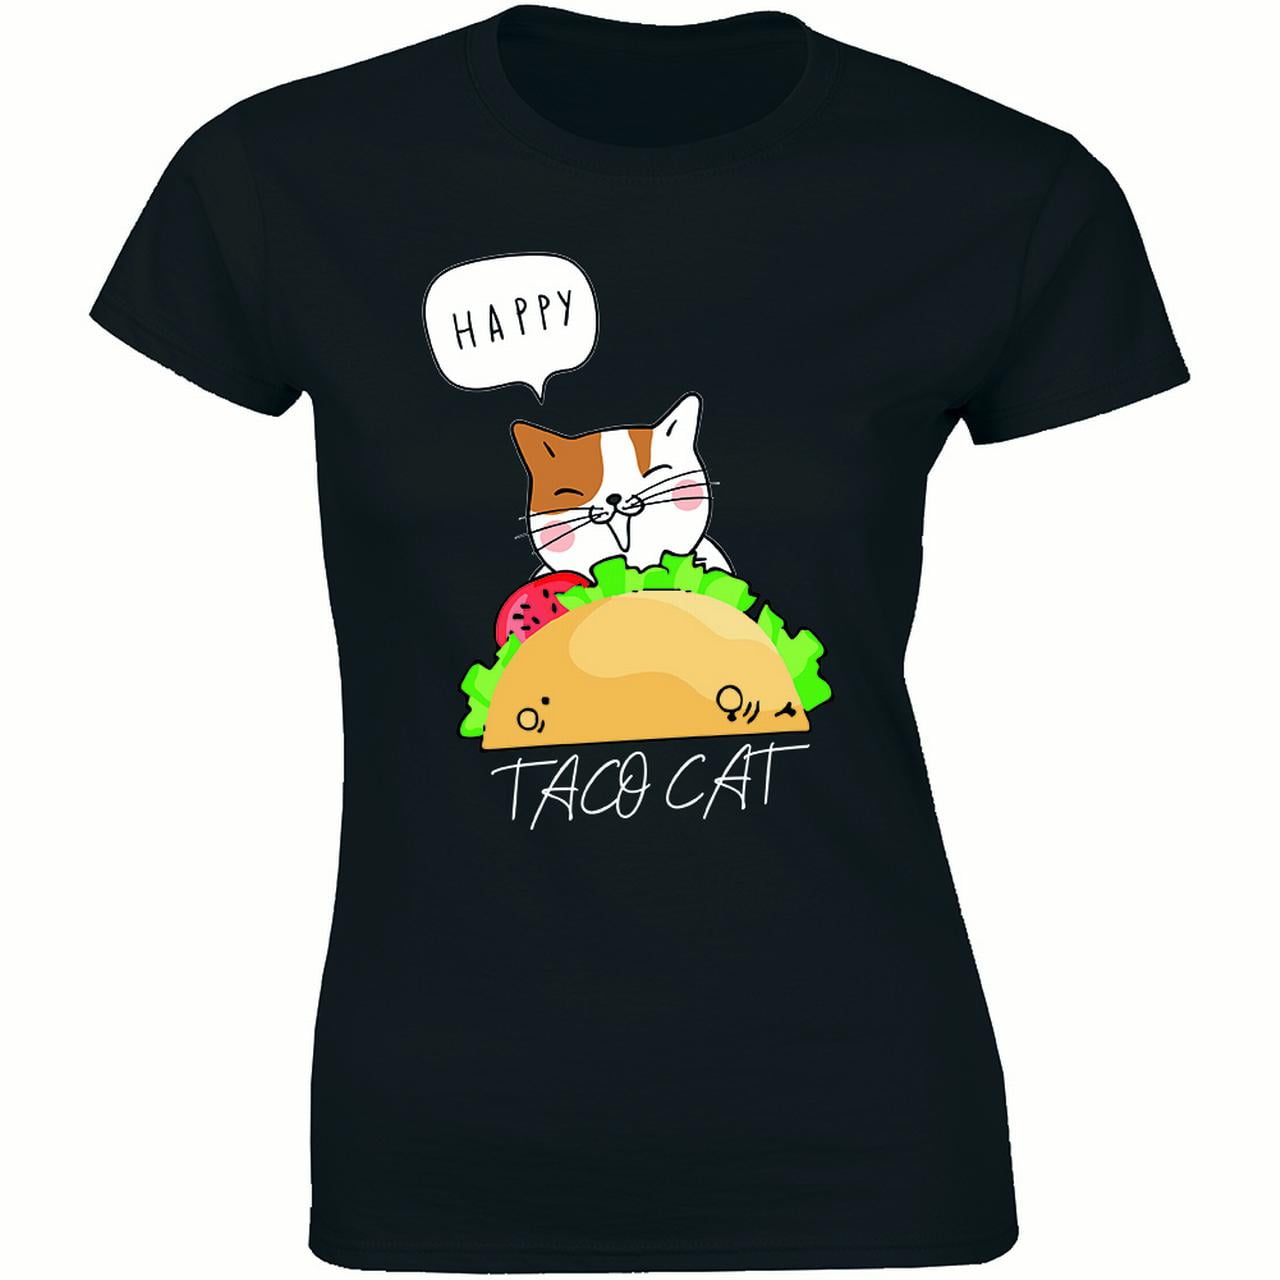 cat t shirts funny